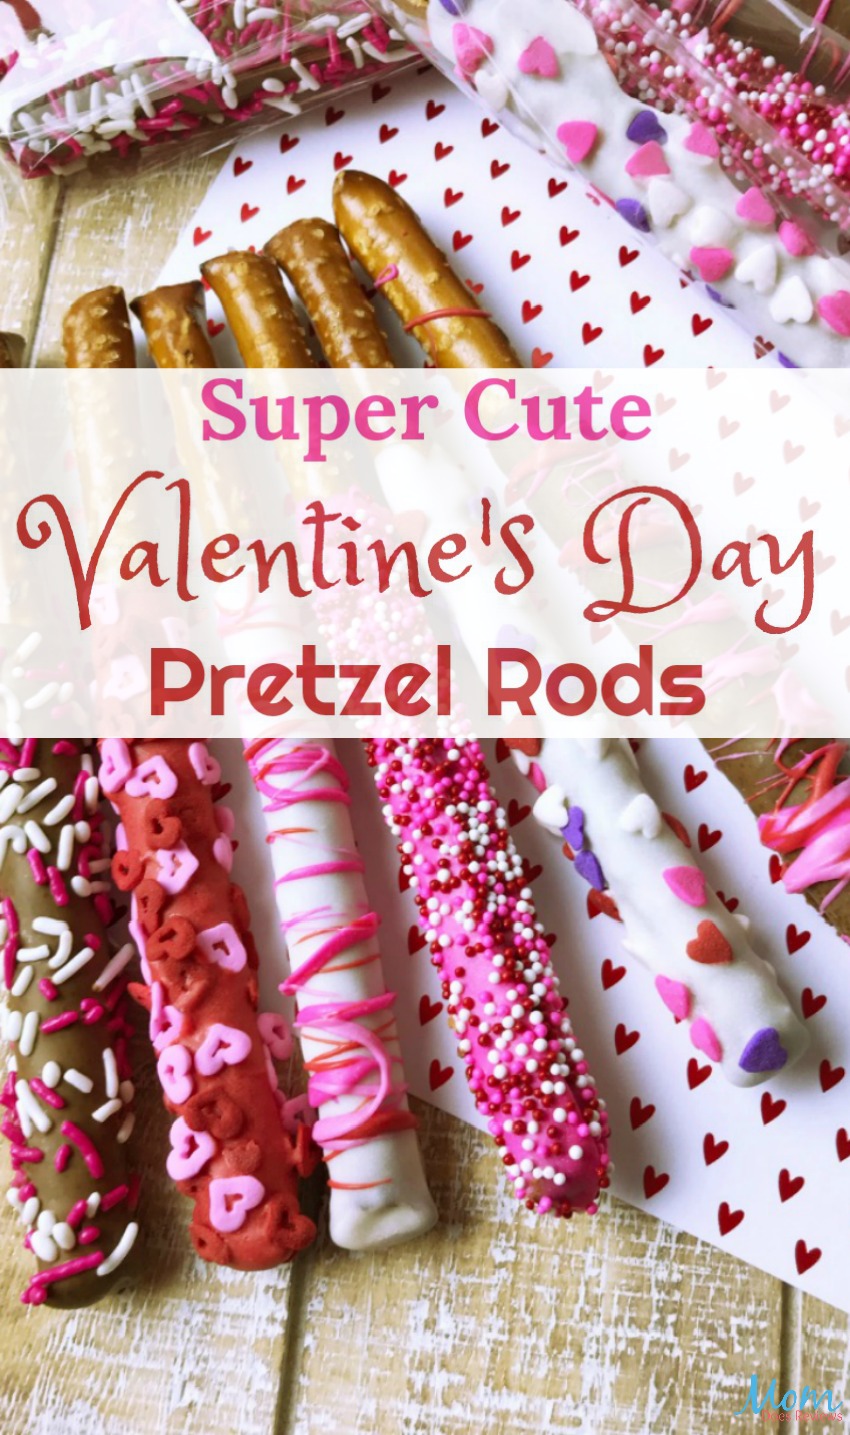 Super Cute Valentine's Day Pretzel Rods #Sweet2019 #sweets #treats #valentinesday #love #yummy #funfood